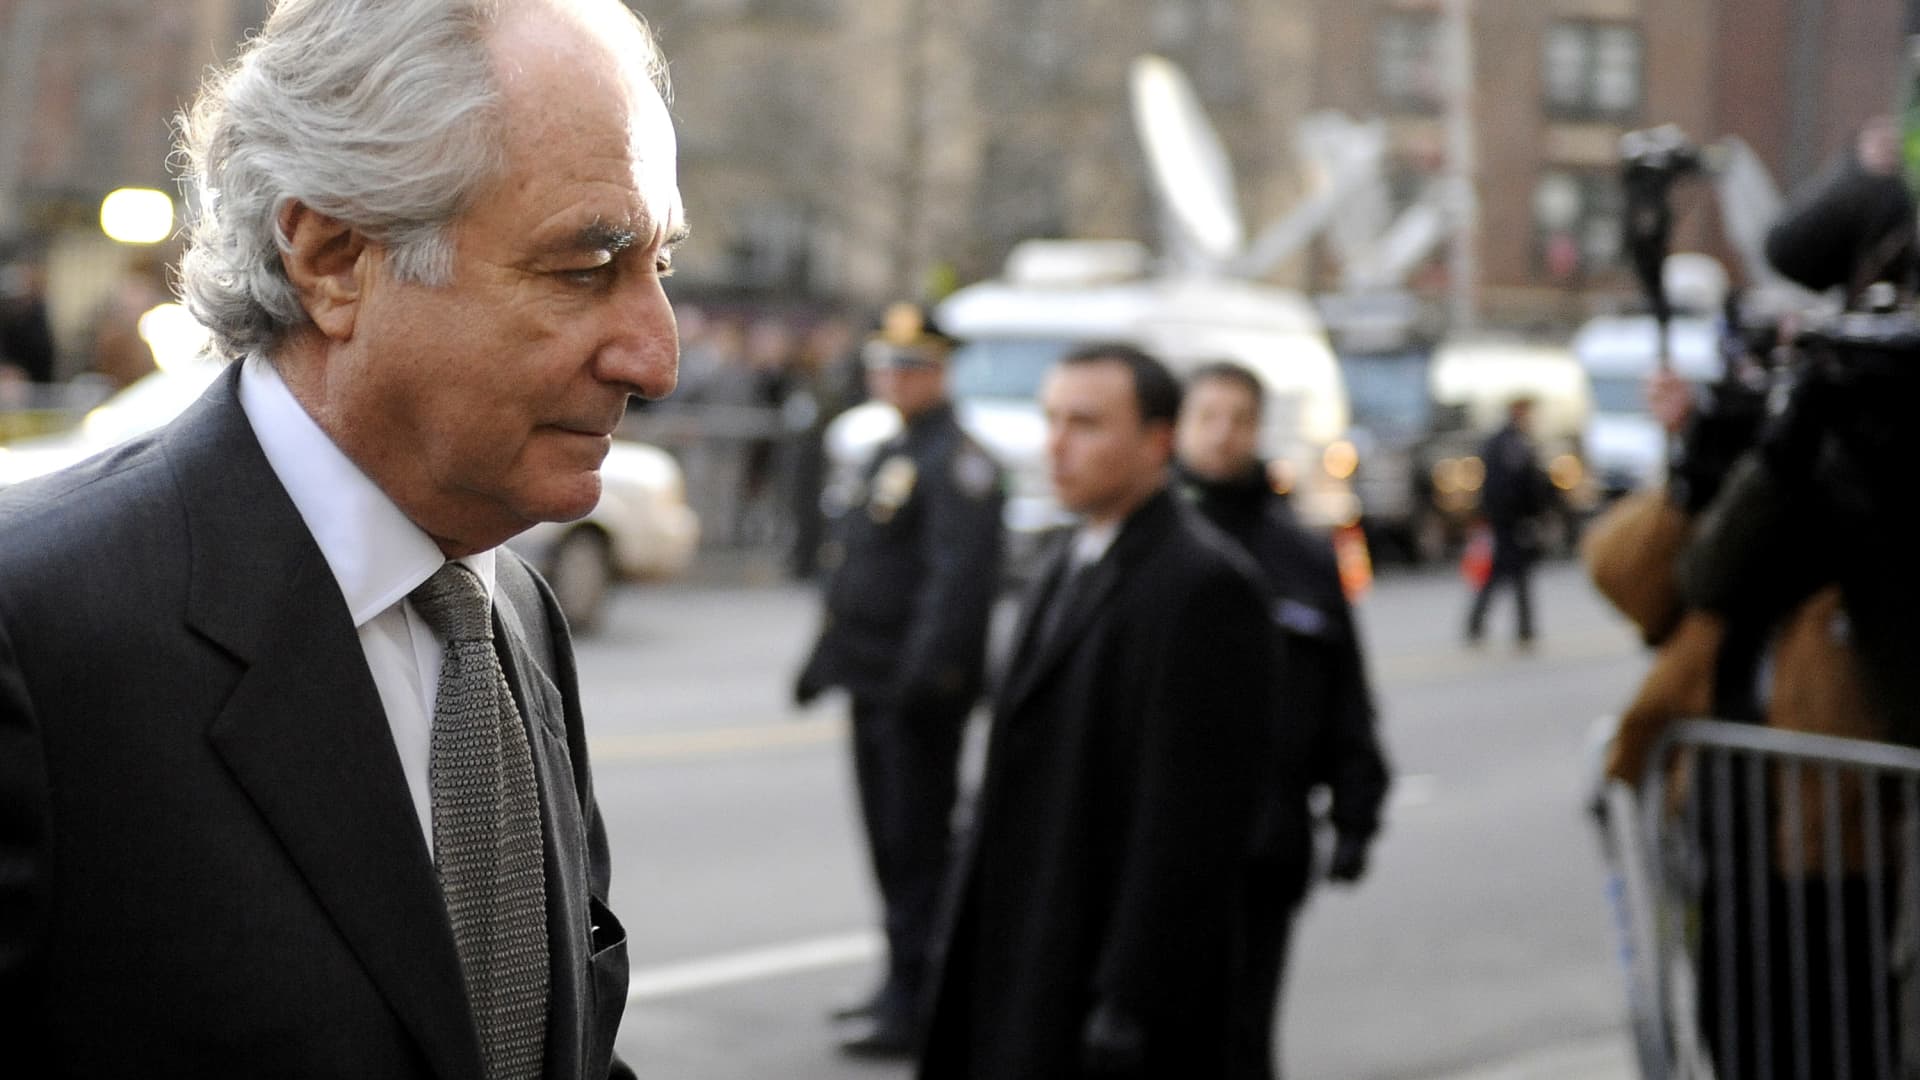 Bernard Madoff arrives at Manhattan Federal court on March 12, 2009 in New York City.